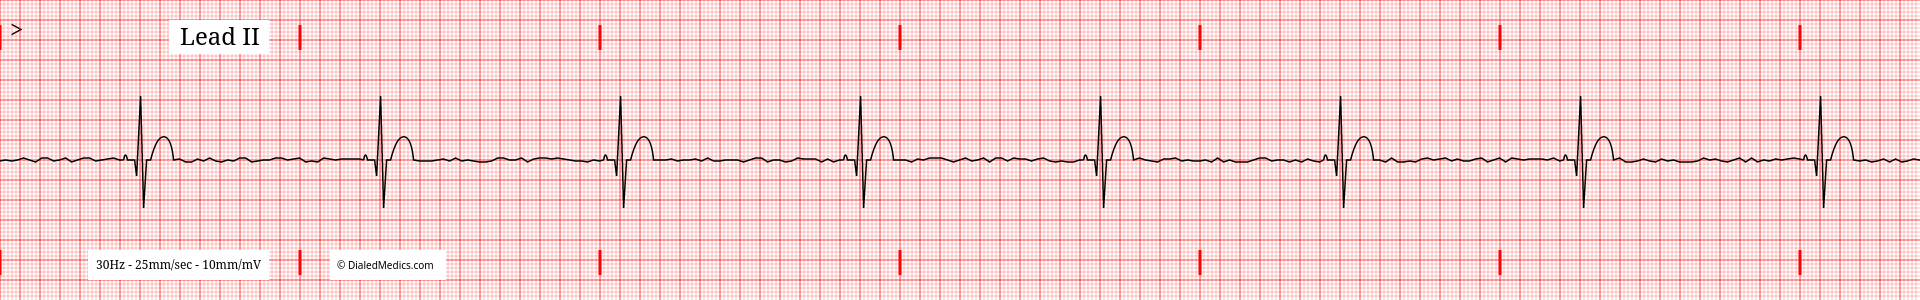 Electrocardiogram tracing of Sinus Bradycardia.